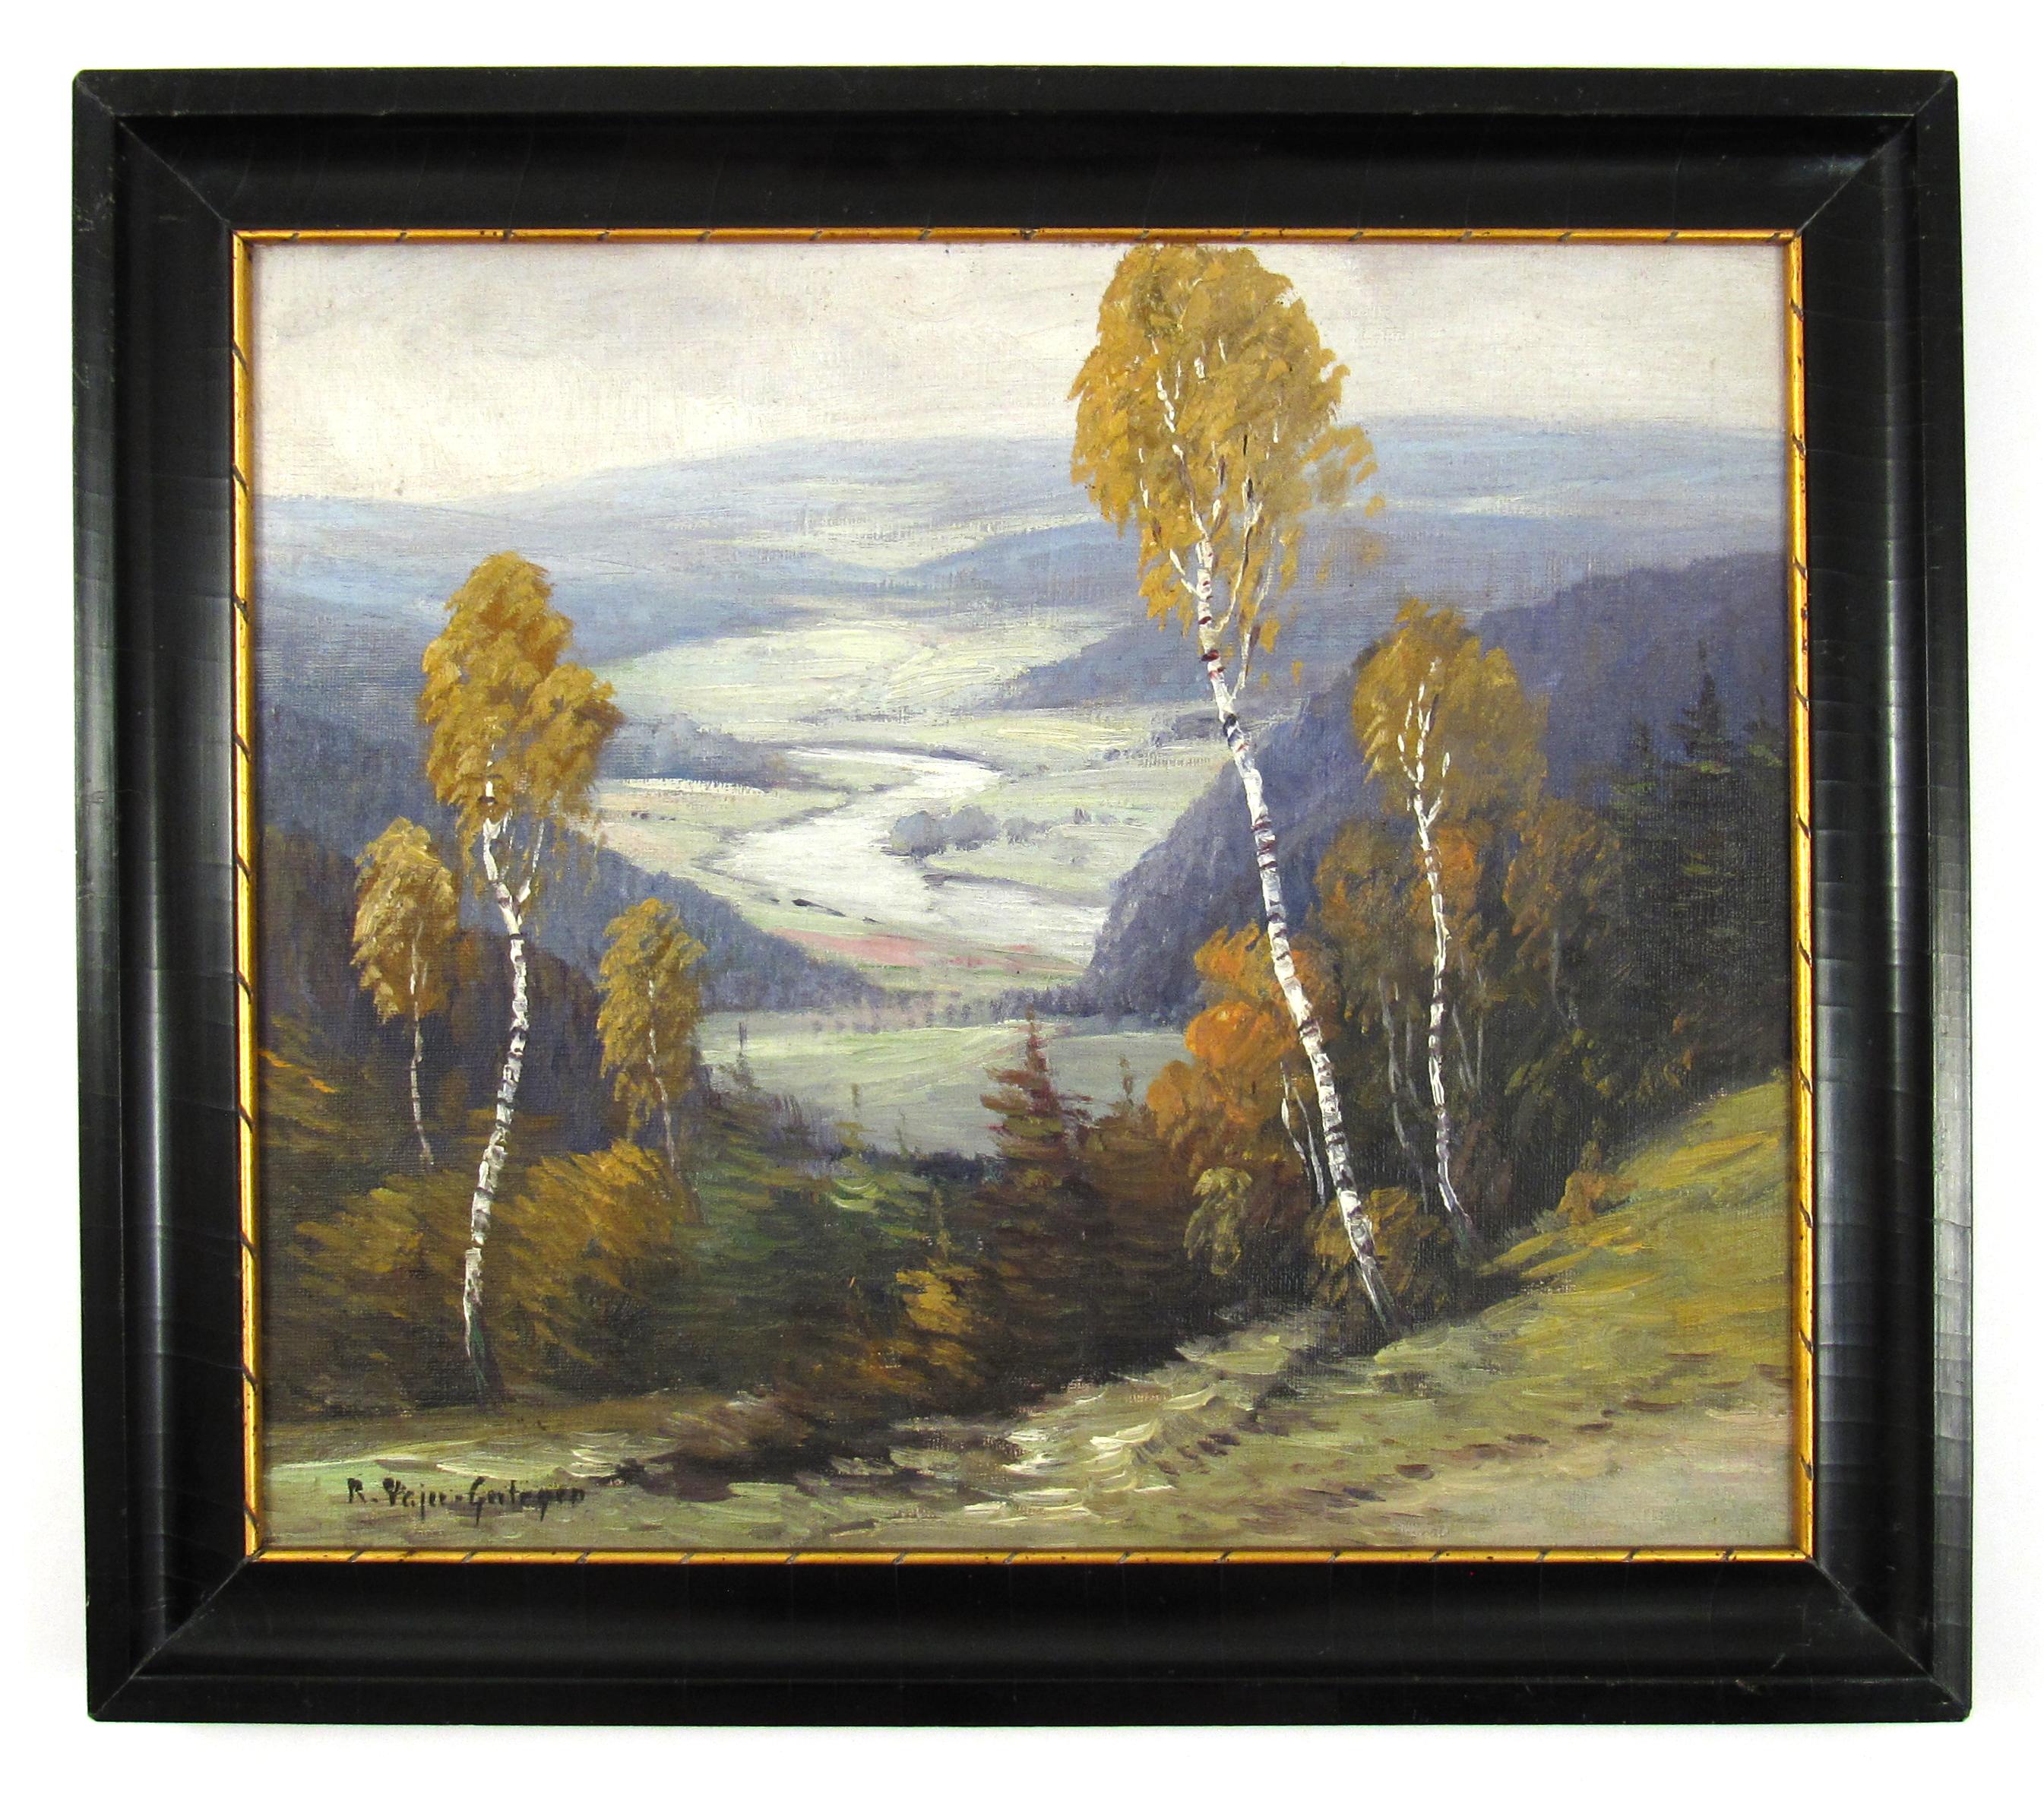 Robert Pajer - Gartegen (1886-1944) Peinture de paysage de la rivière Donau Autriche 1924 - Painting de Robert PAJER-GARTEGEN